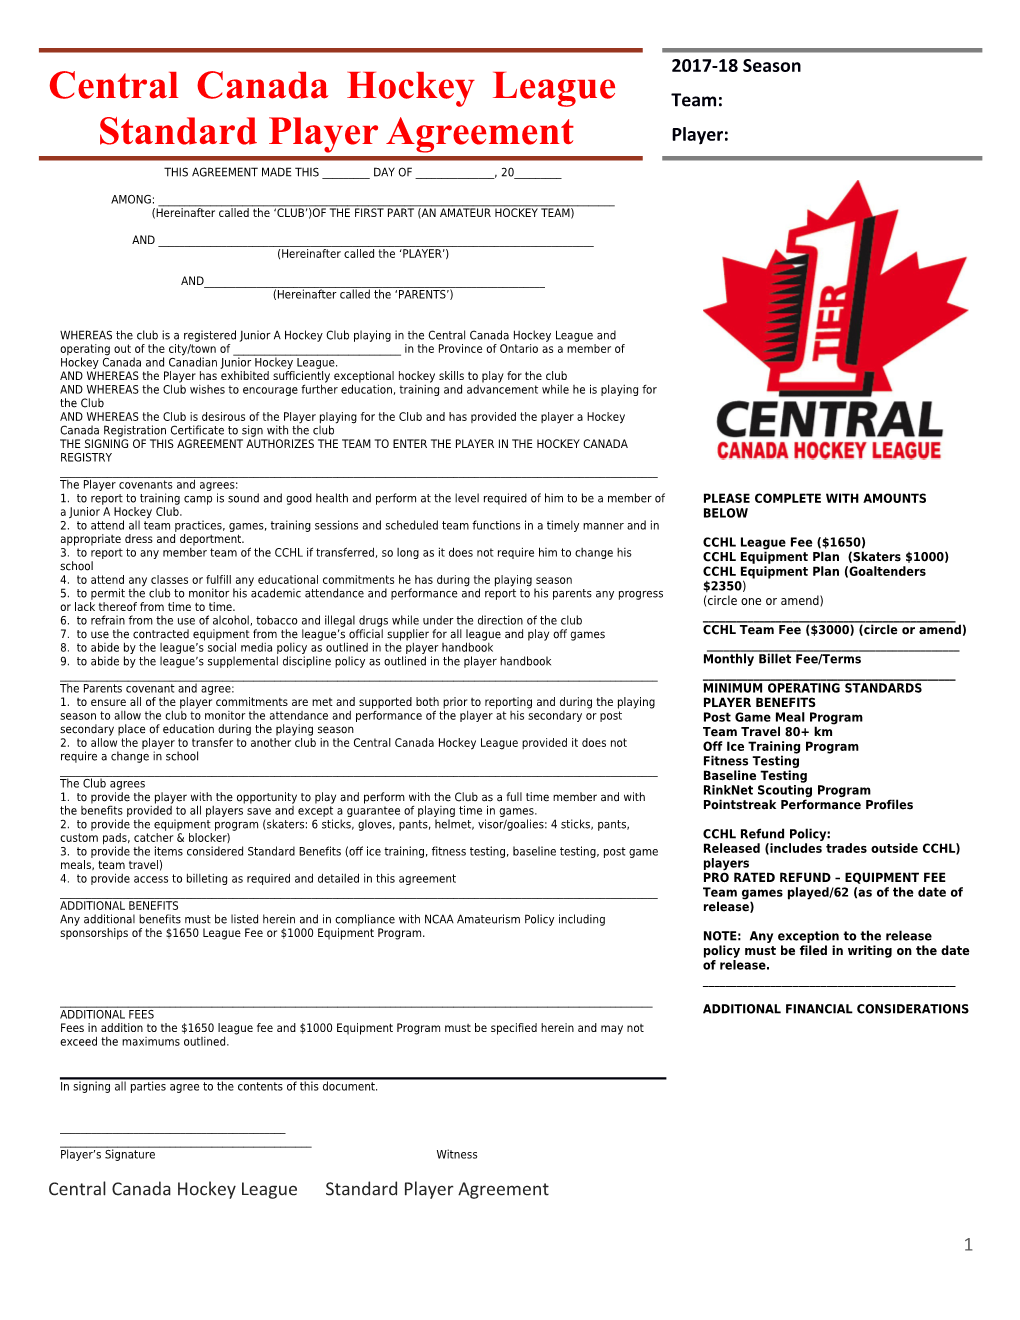 Central Canada Hockey League Standard Player Agreement